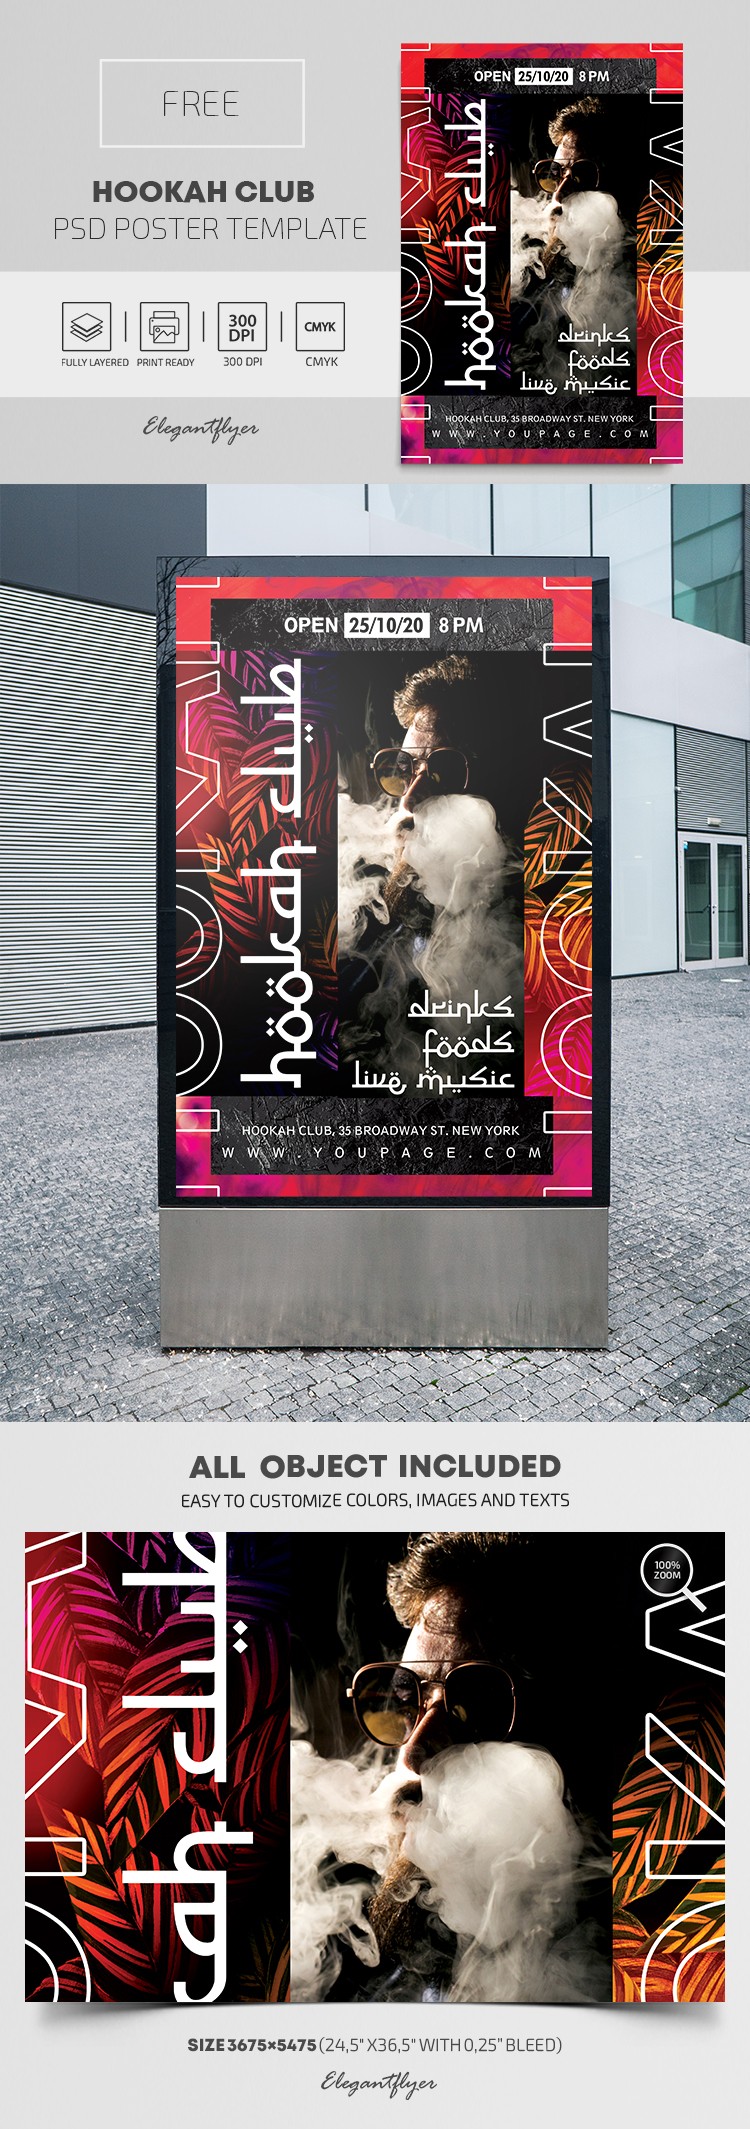 Hookah Club Poster = Hookah Club Plakat by ElegantFlyer